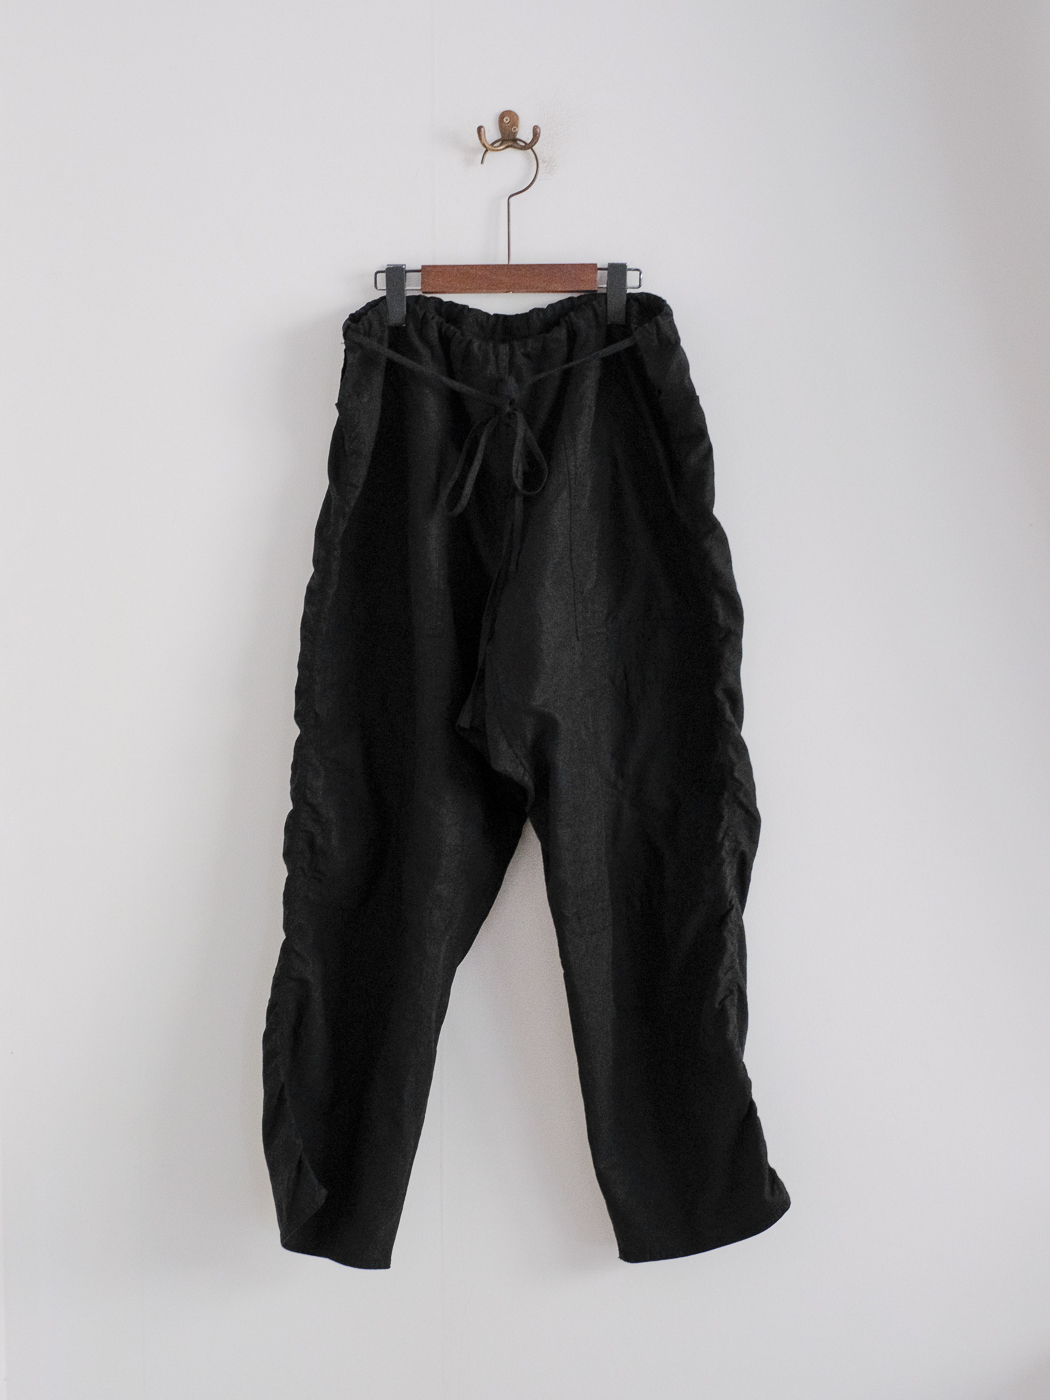 Drawstring work pants(high count linen) col.black | Re;li